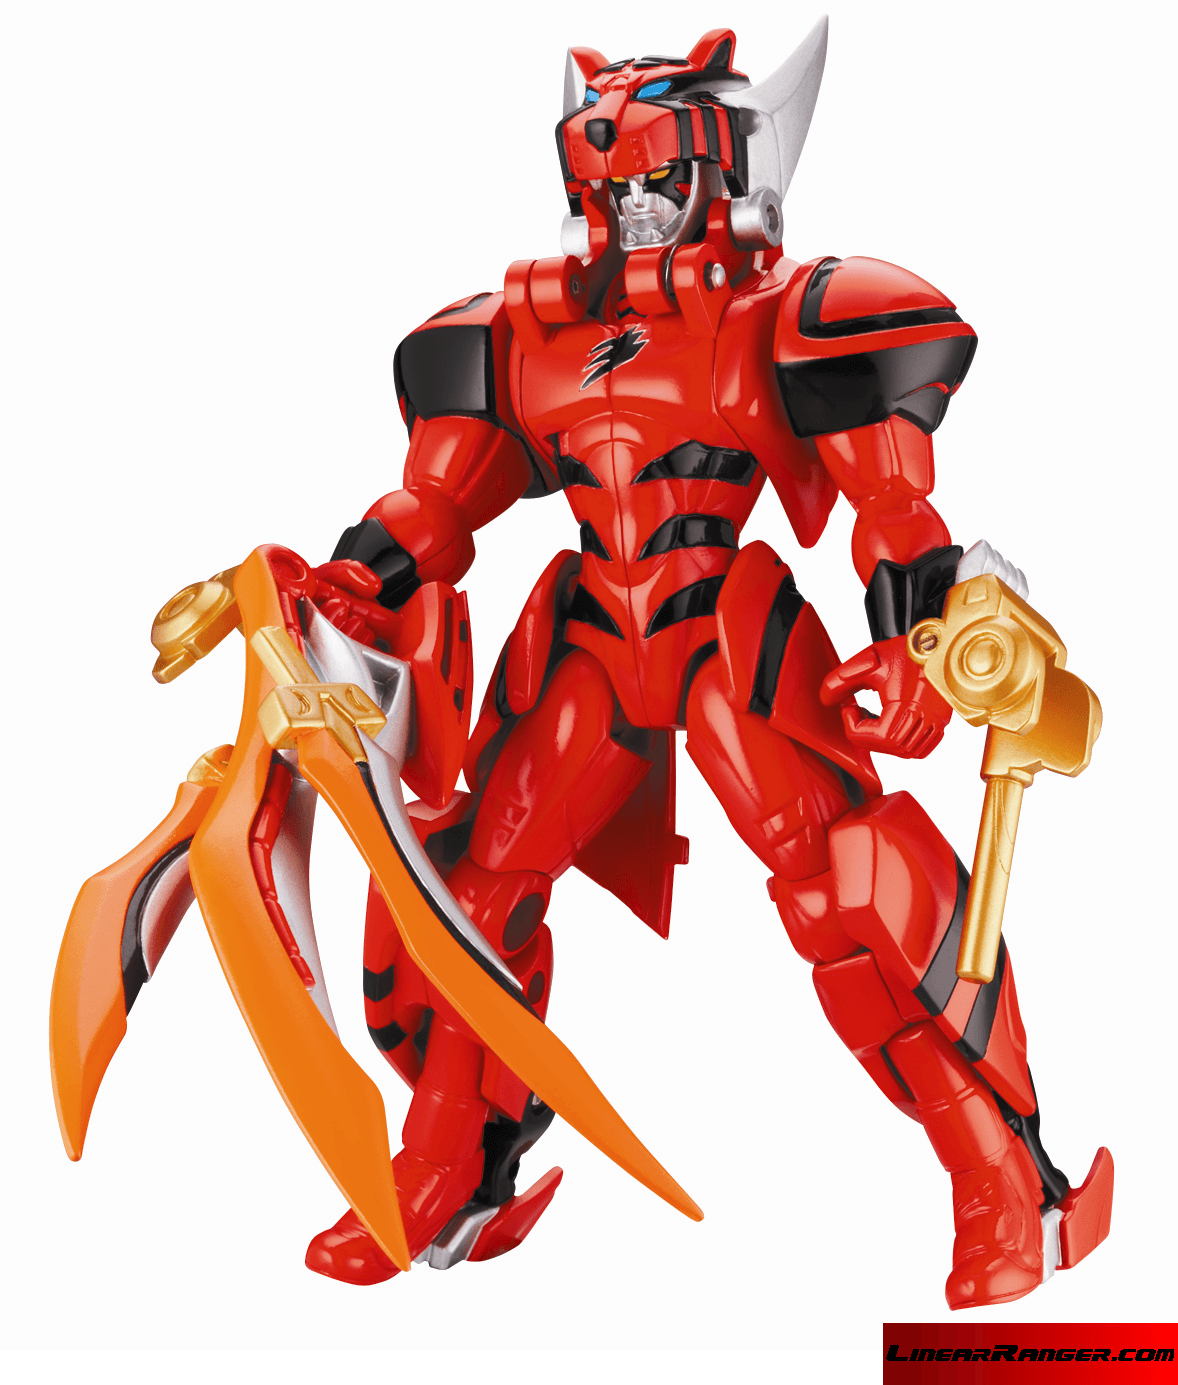 Power Rangers Jungle Fury Armored Red Ranger figure #battlizer